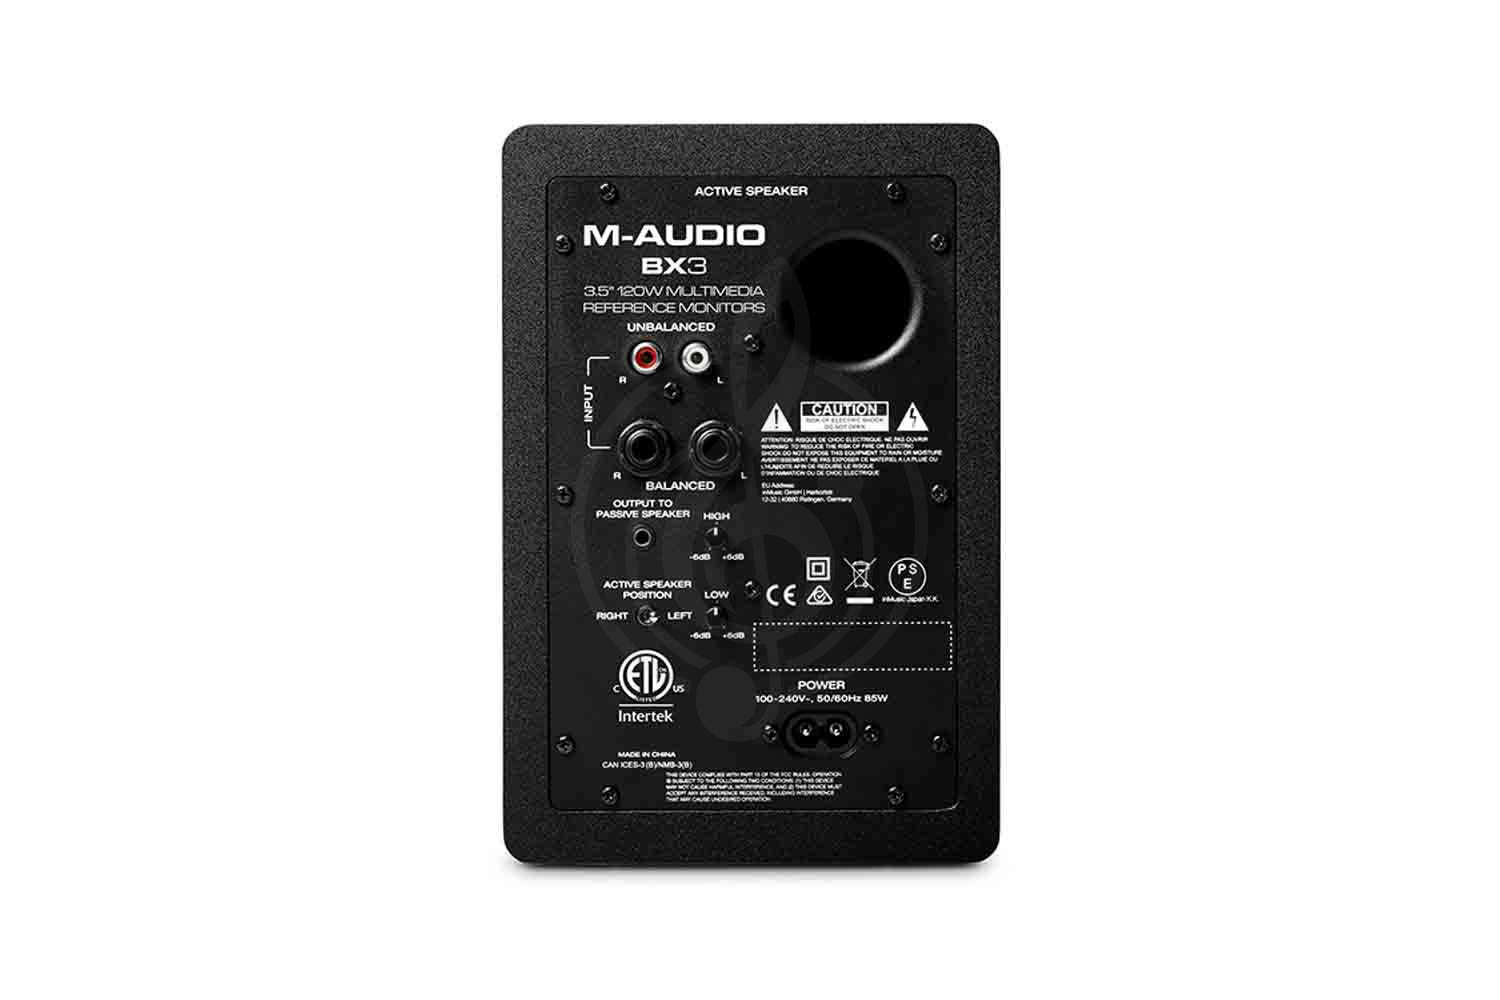 Audio bx. M-Audio bx4. Студийные мониторы m-Audio bx4. M Audio m3 студийные мониторы. +Студийные +мониторы +(пара) +m-Audio +bx4 +монитор купить.